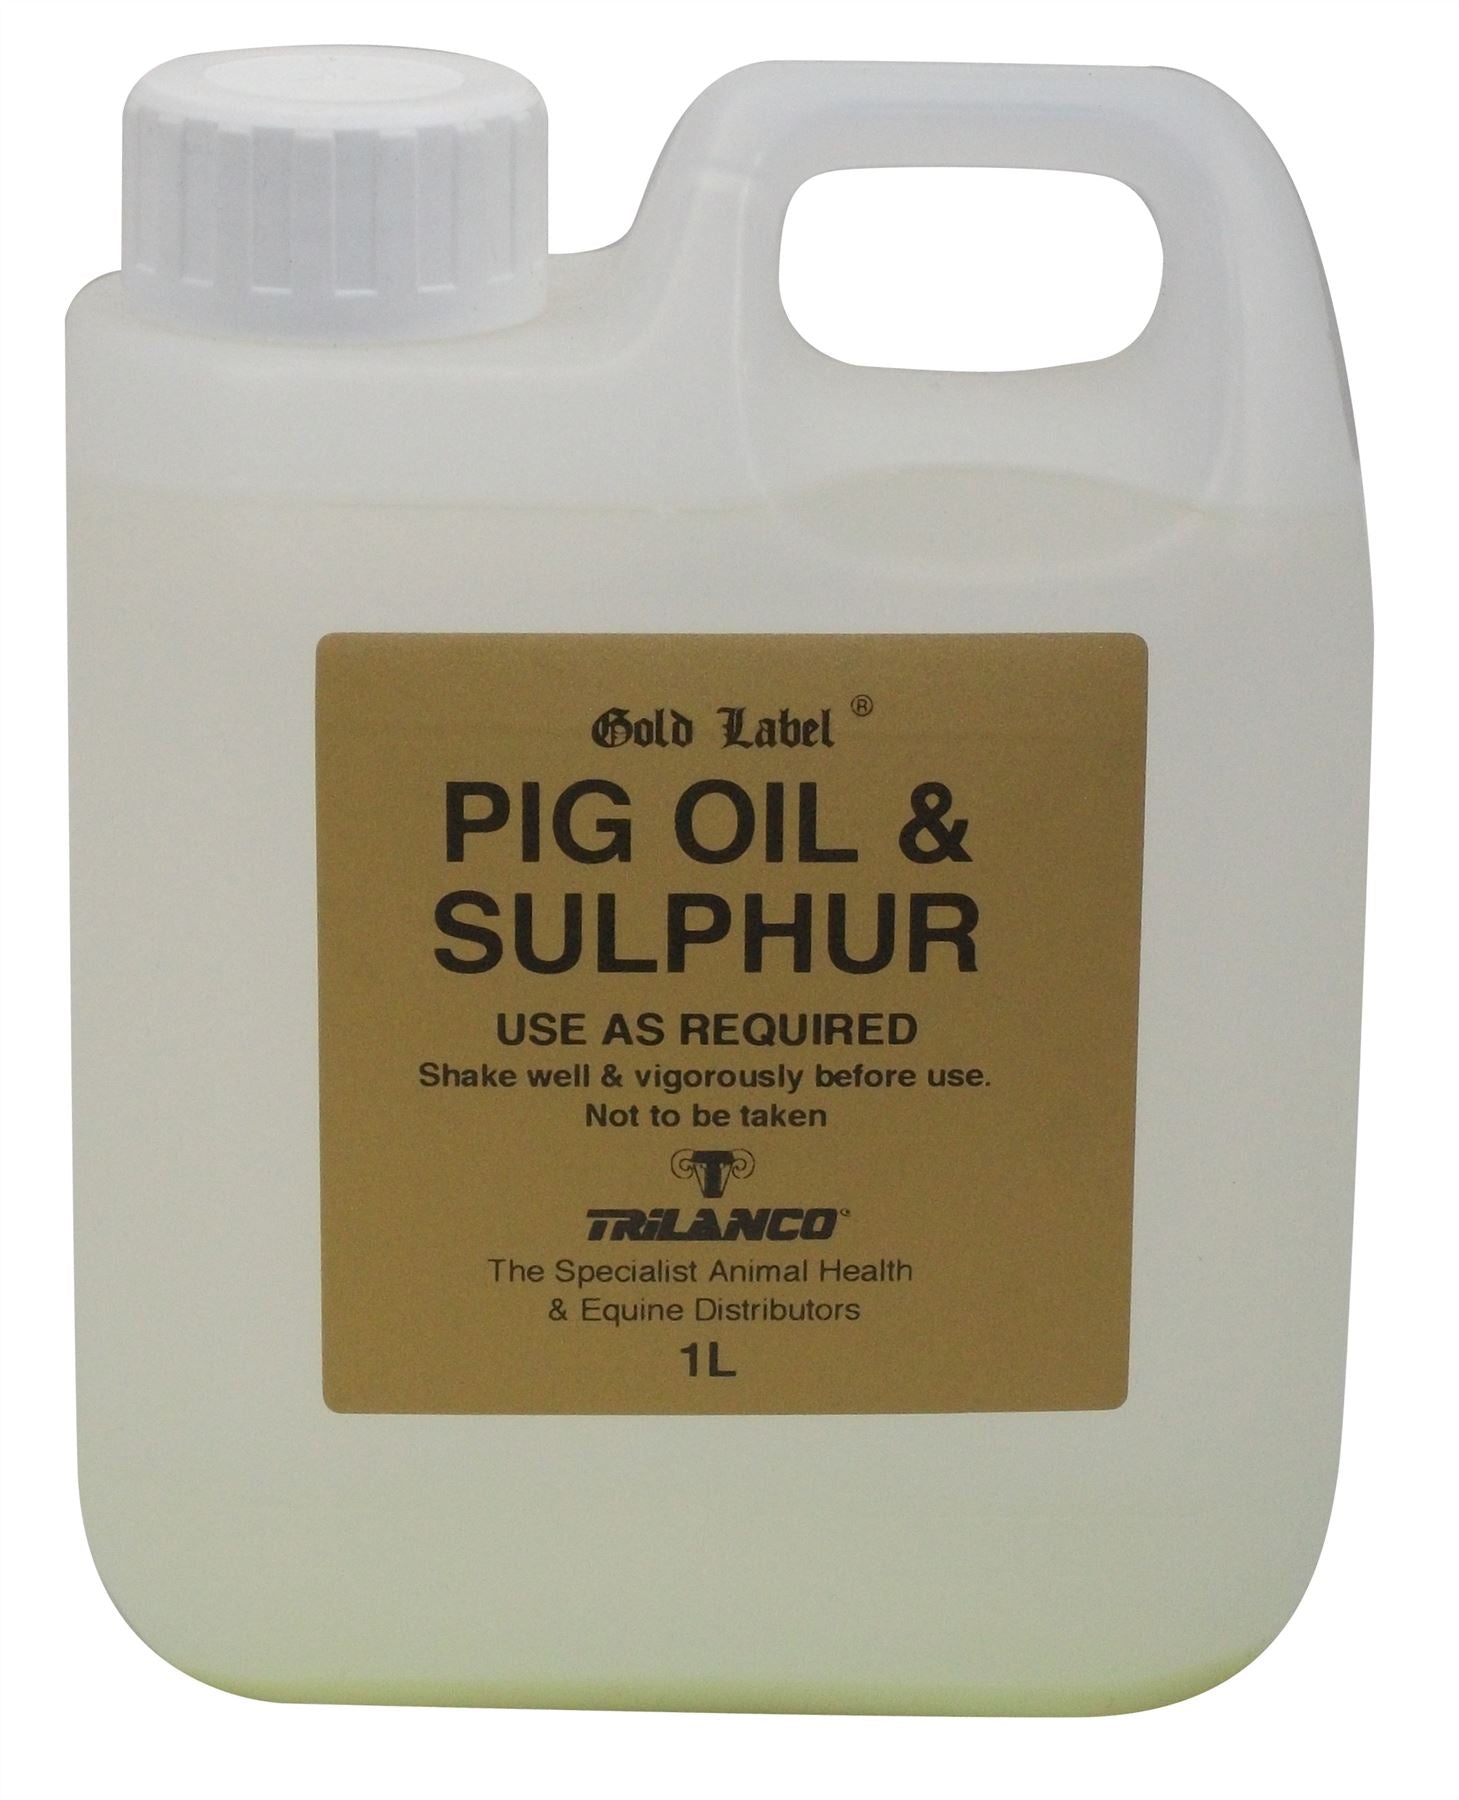 Gold Label Pig Oil & Sulphur - Just Horse Riders